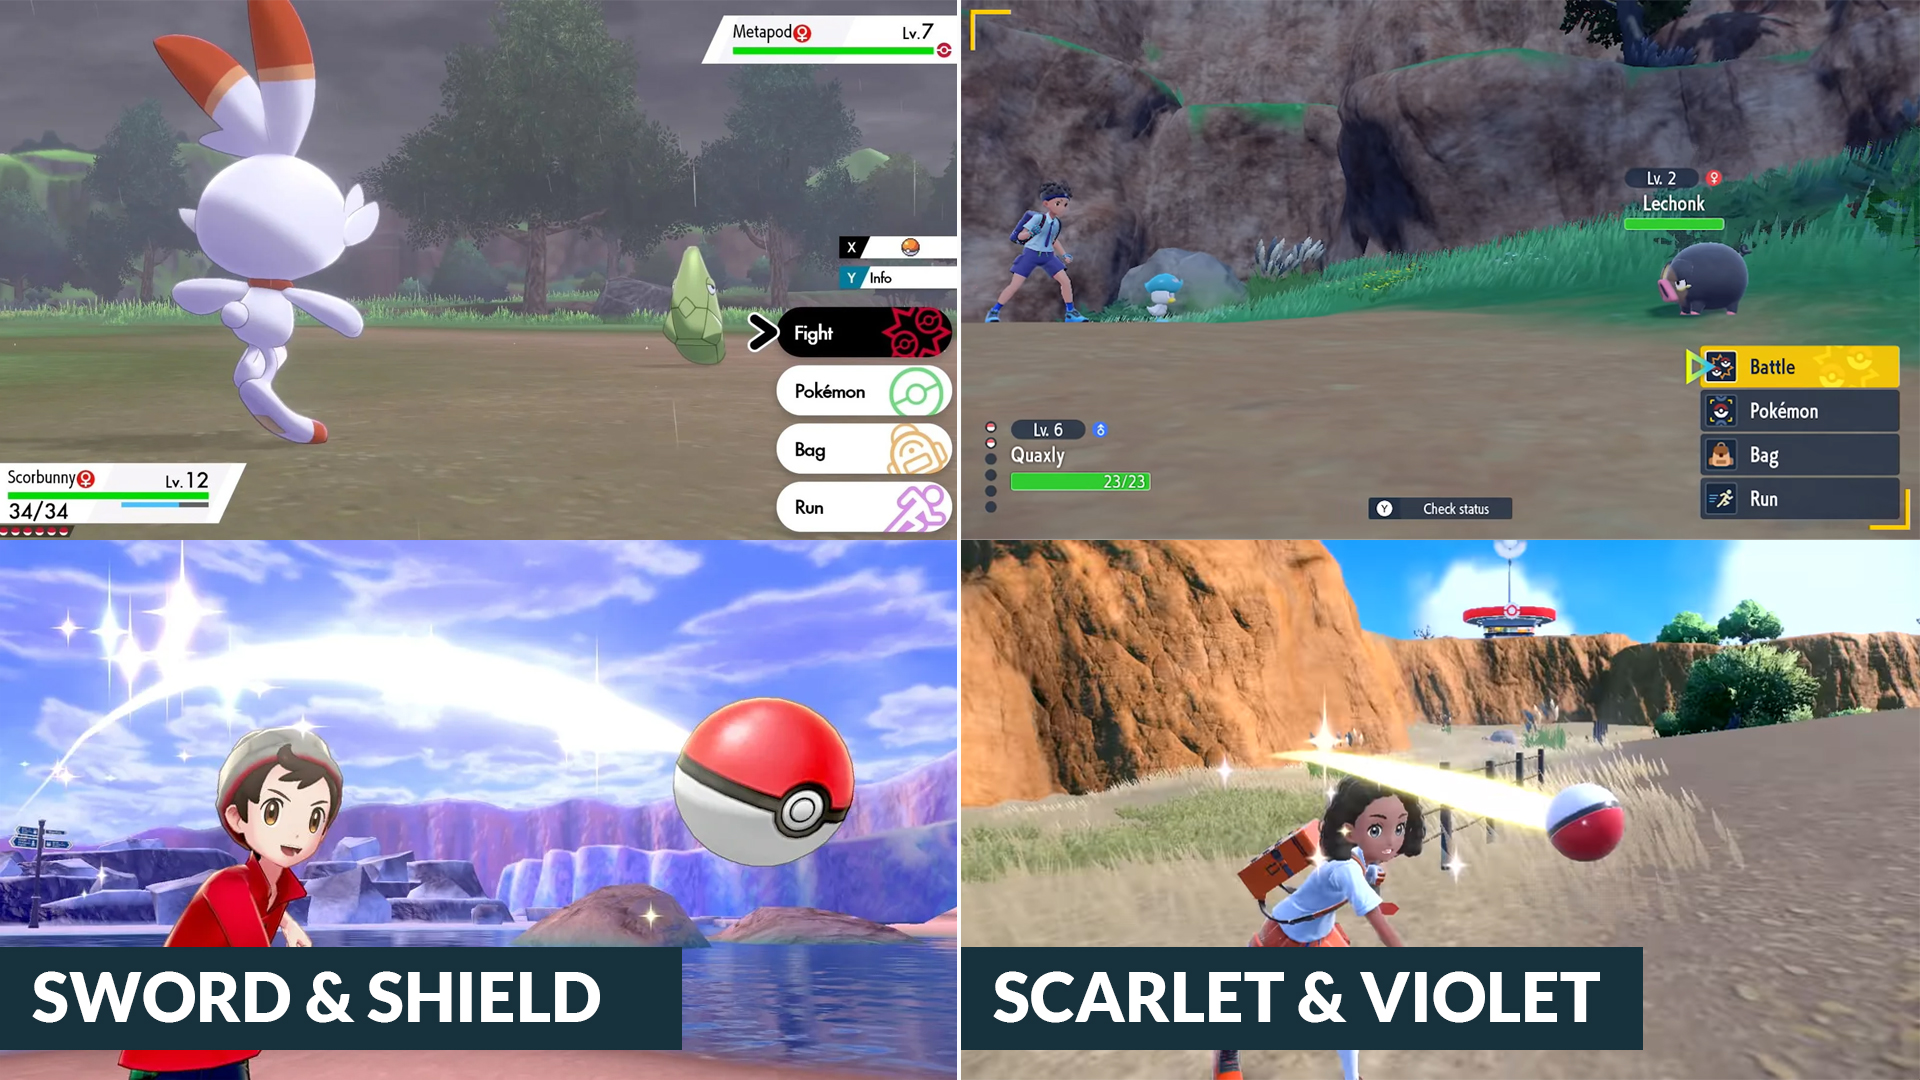 Pokémon Sword and Shield / Scarlet and Violet Comparison